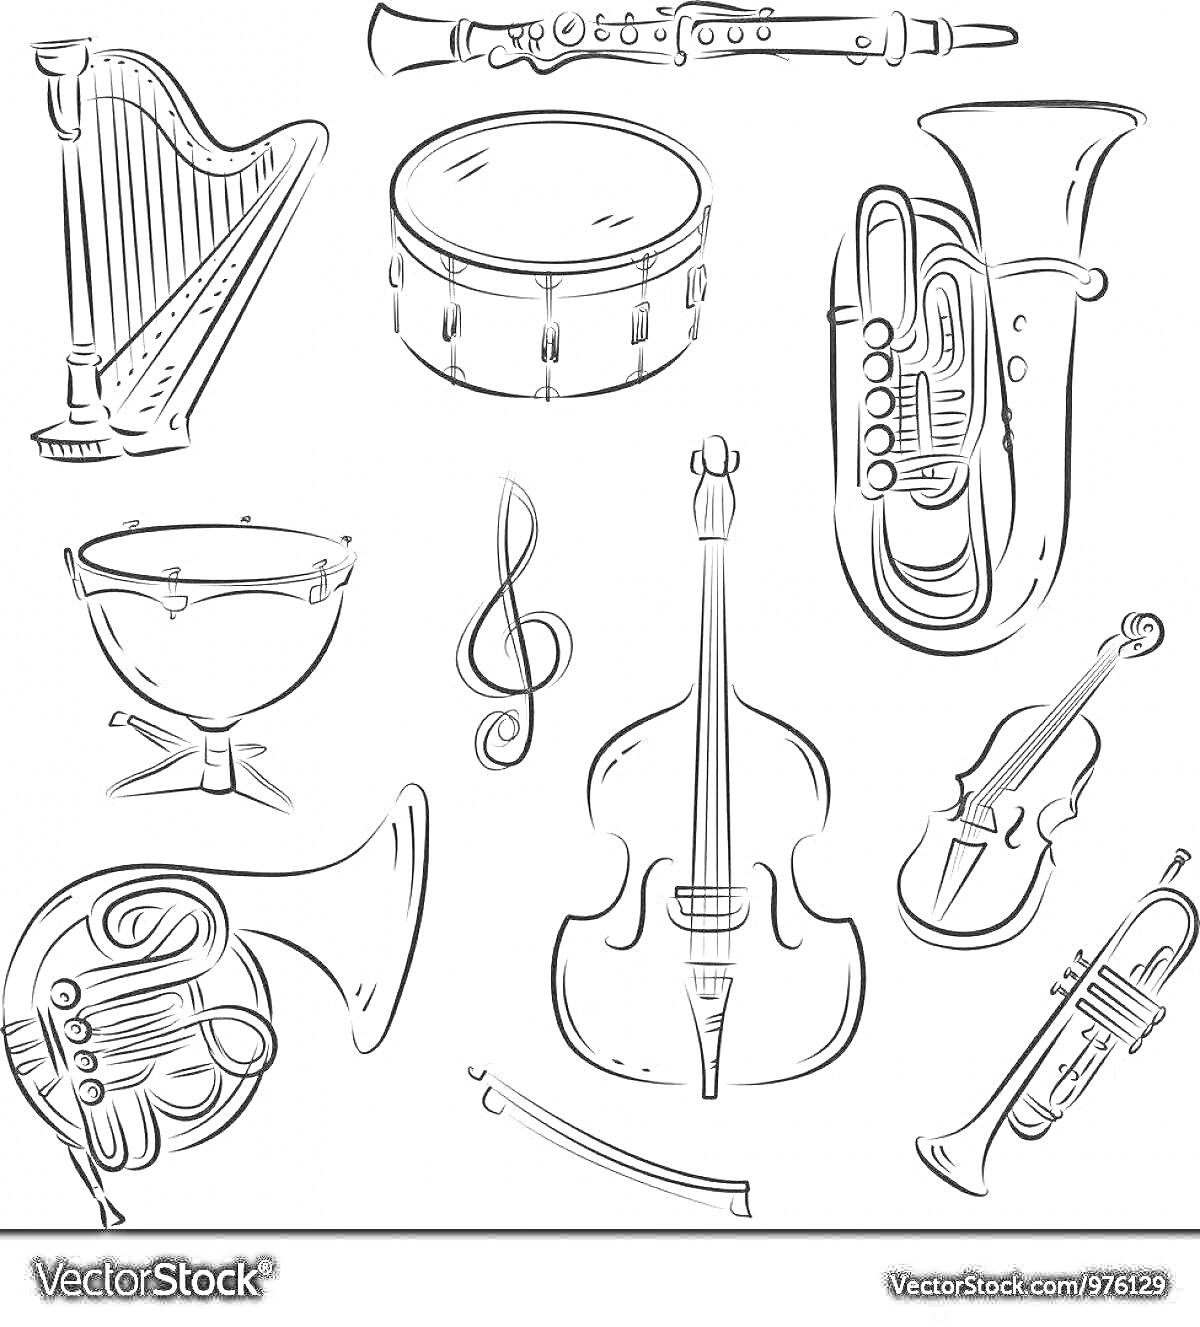 На раскраске изображено: Оркестр, Музыка, Арфа, Барабан, Туба, Труба, Контрабас, Скрипка, Литавры, Дирижер, Скрипичный ключ